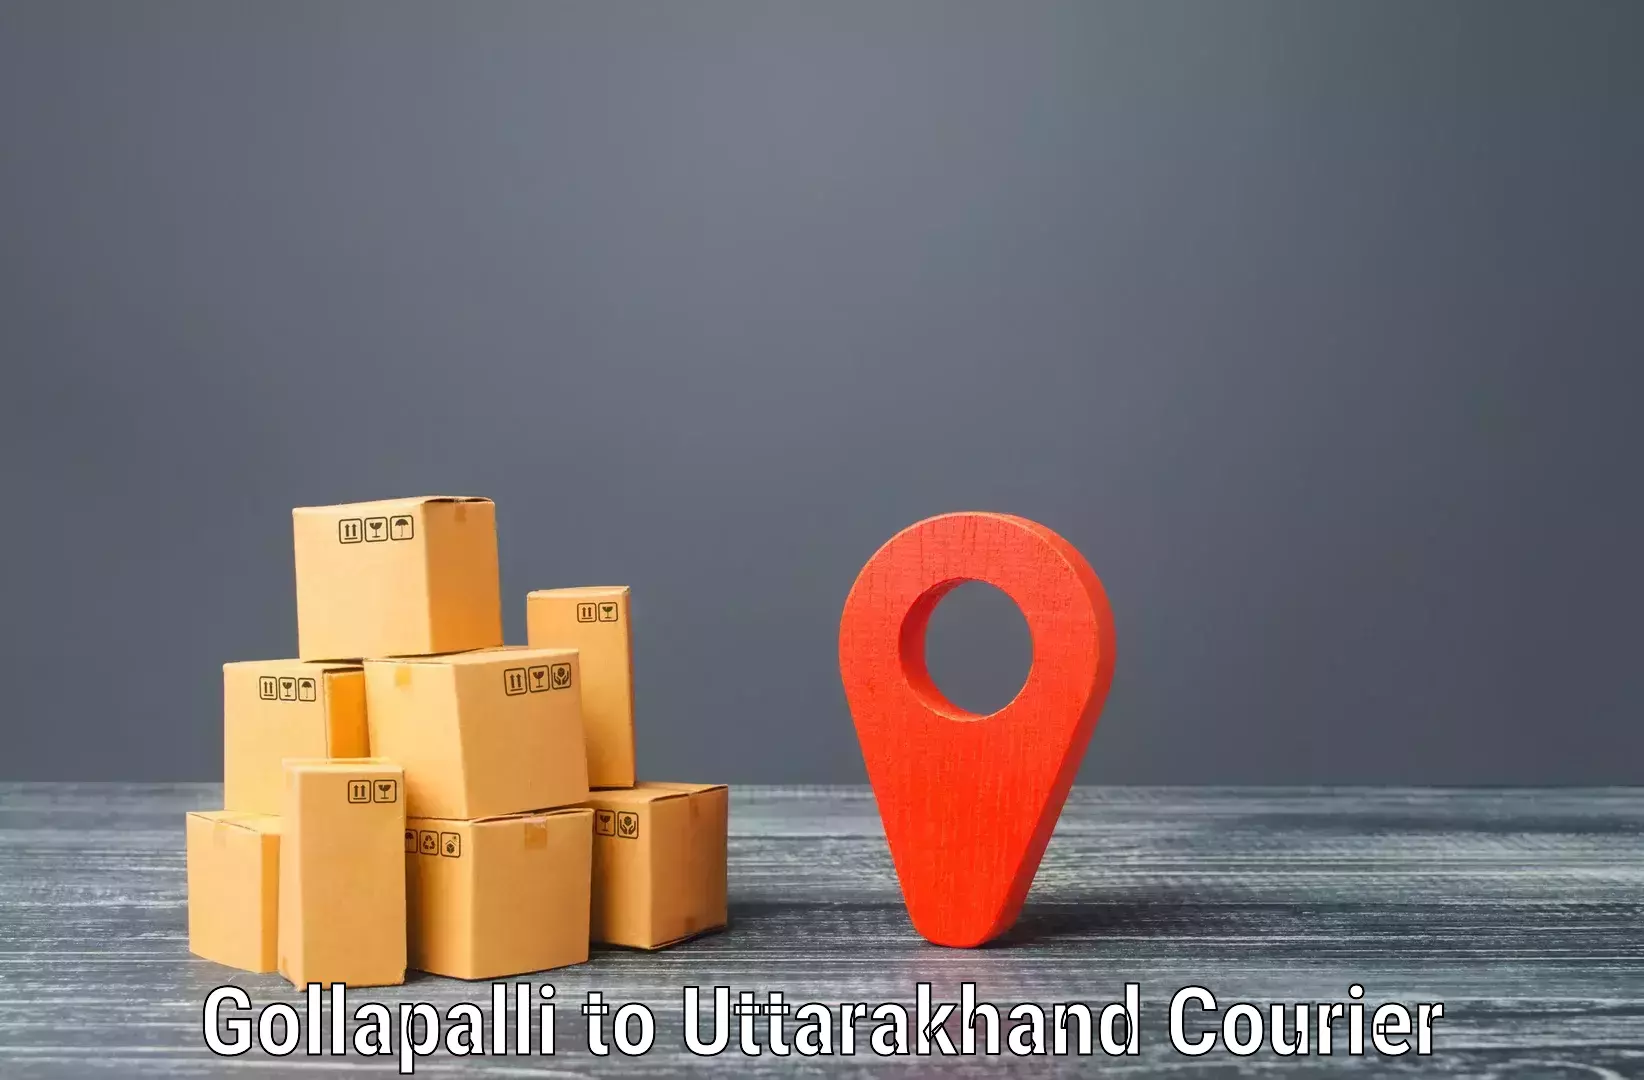 Courier service partnerships Gollapalli to Haridwar